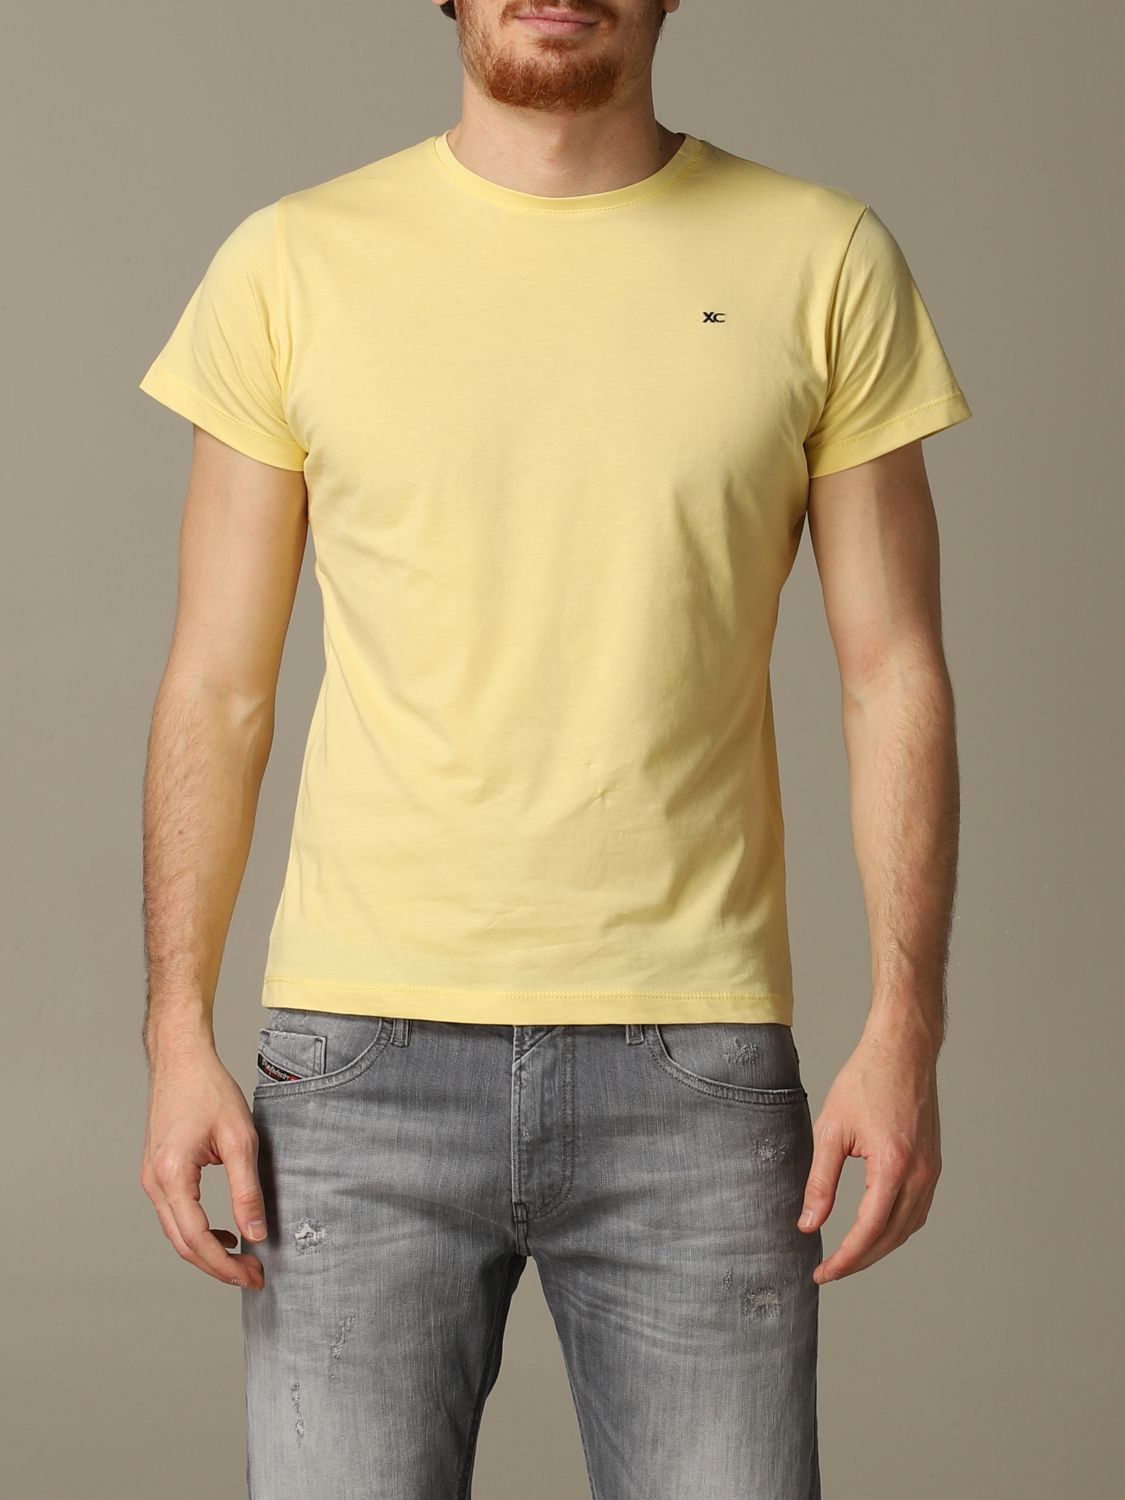 Xc T-Shirt XC Men colour Lemon